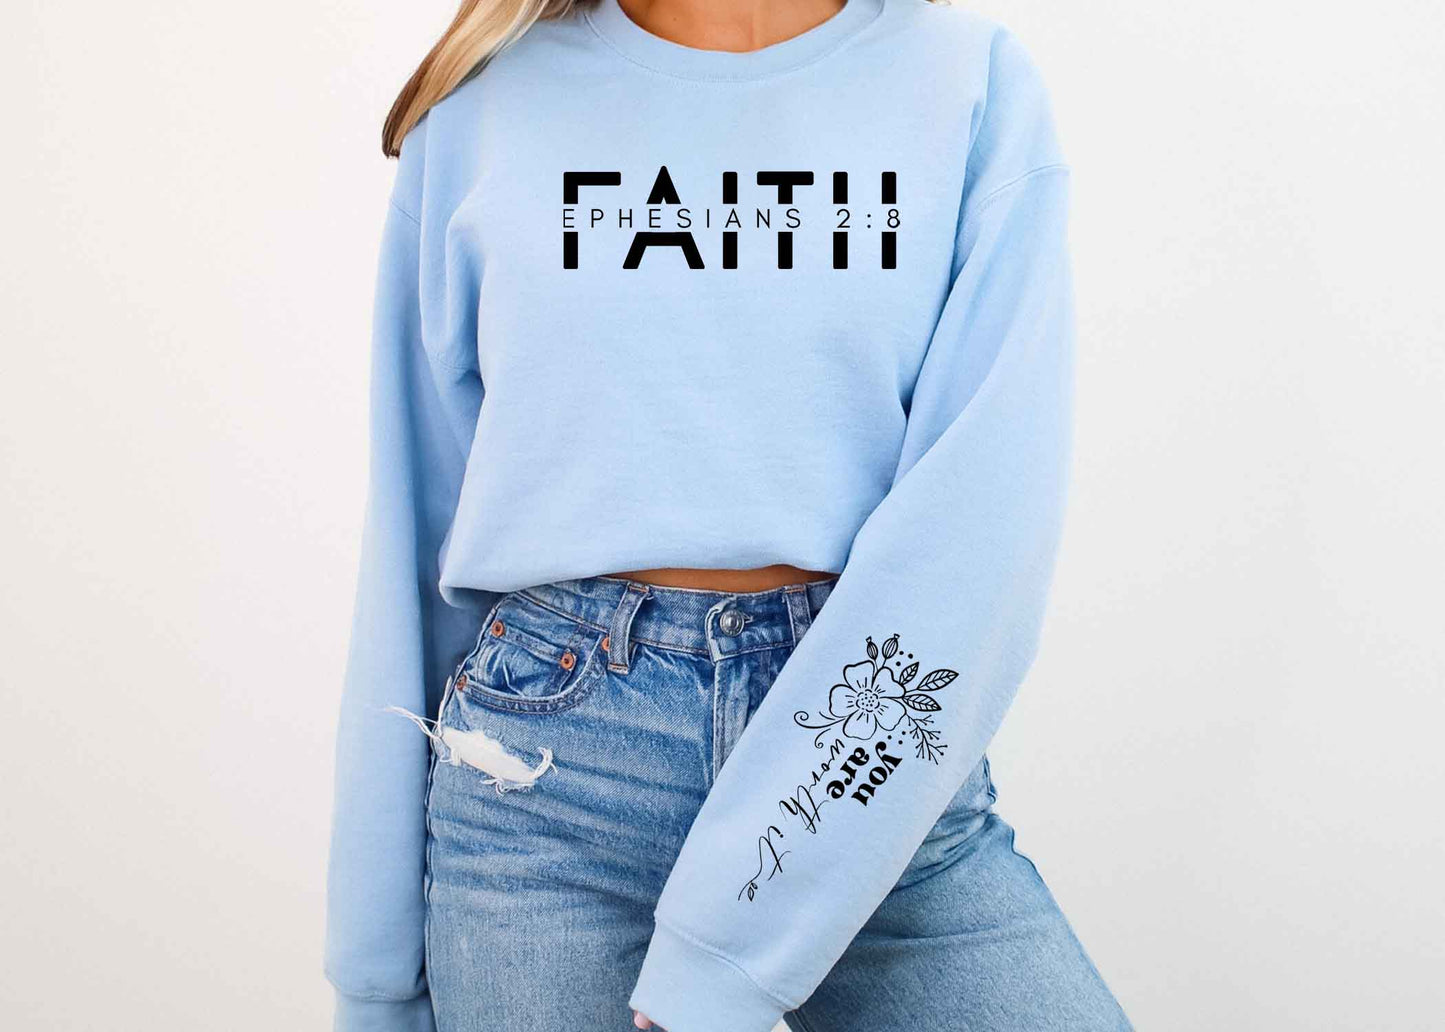 Faith you are worth it sweatshirt